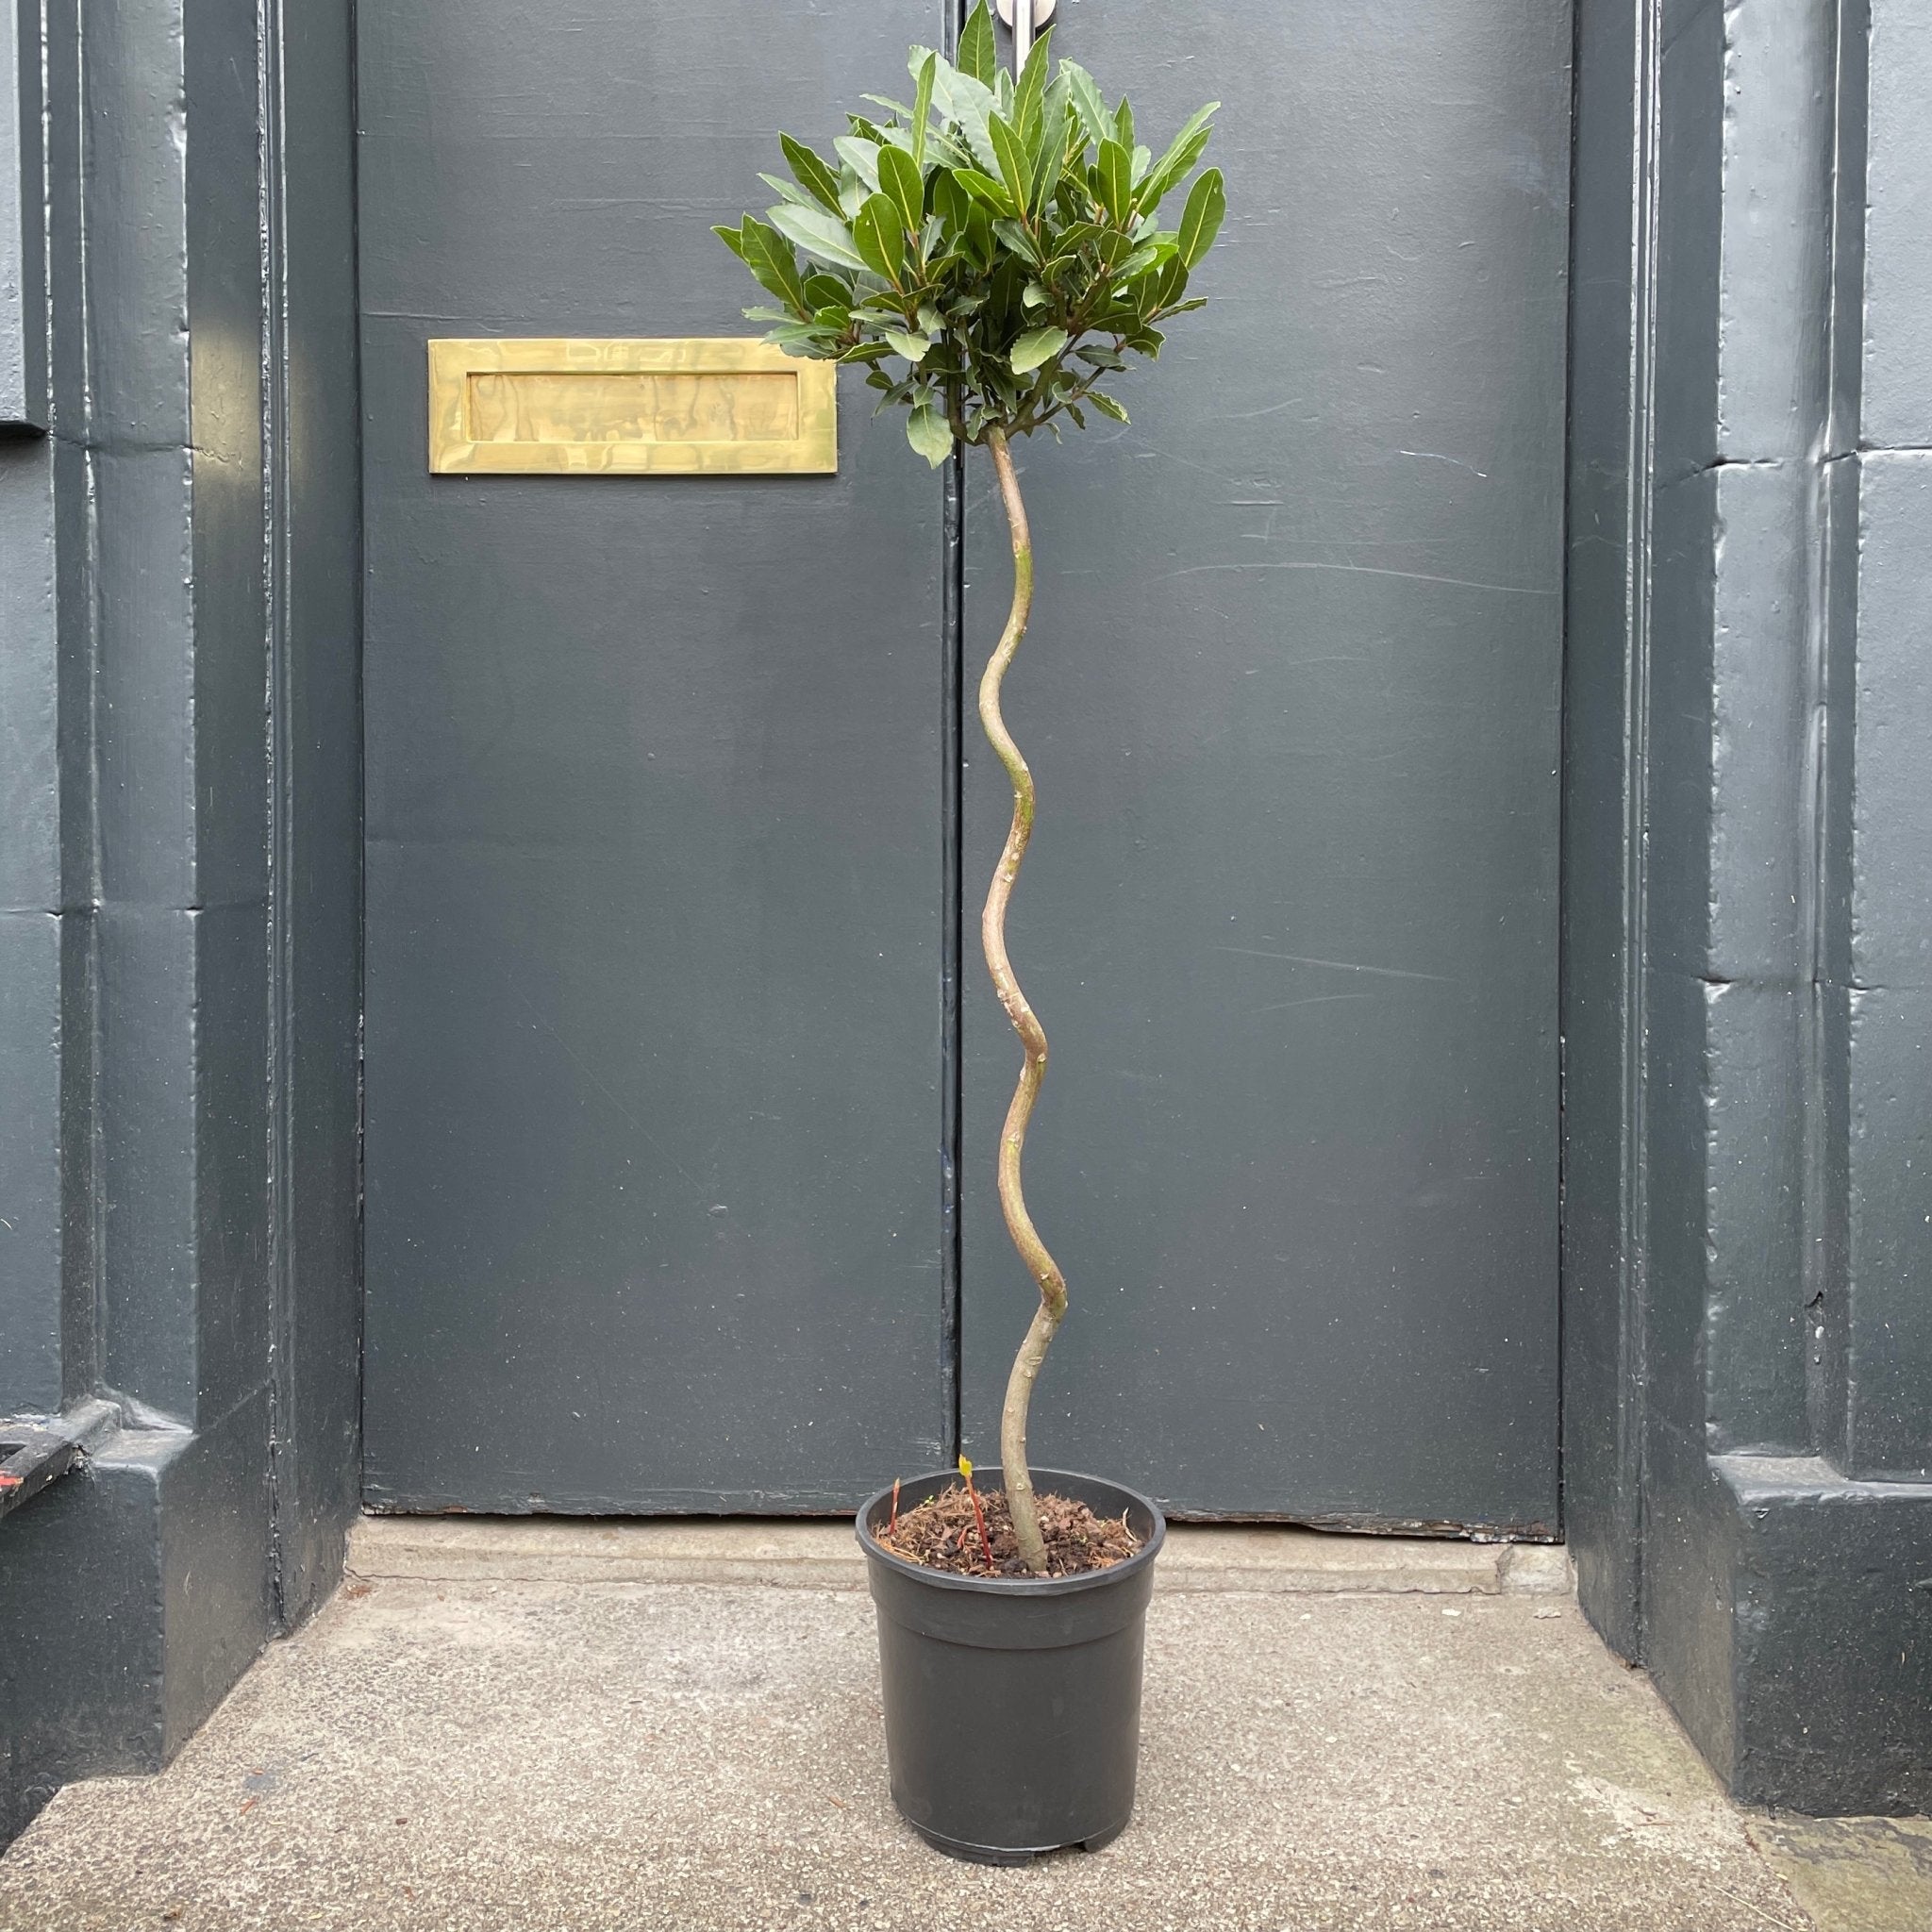 Laurus nobilis [Bay Tree] - grow urban. UK